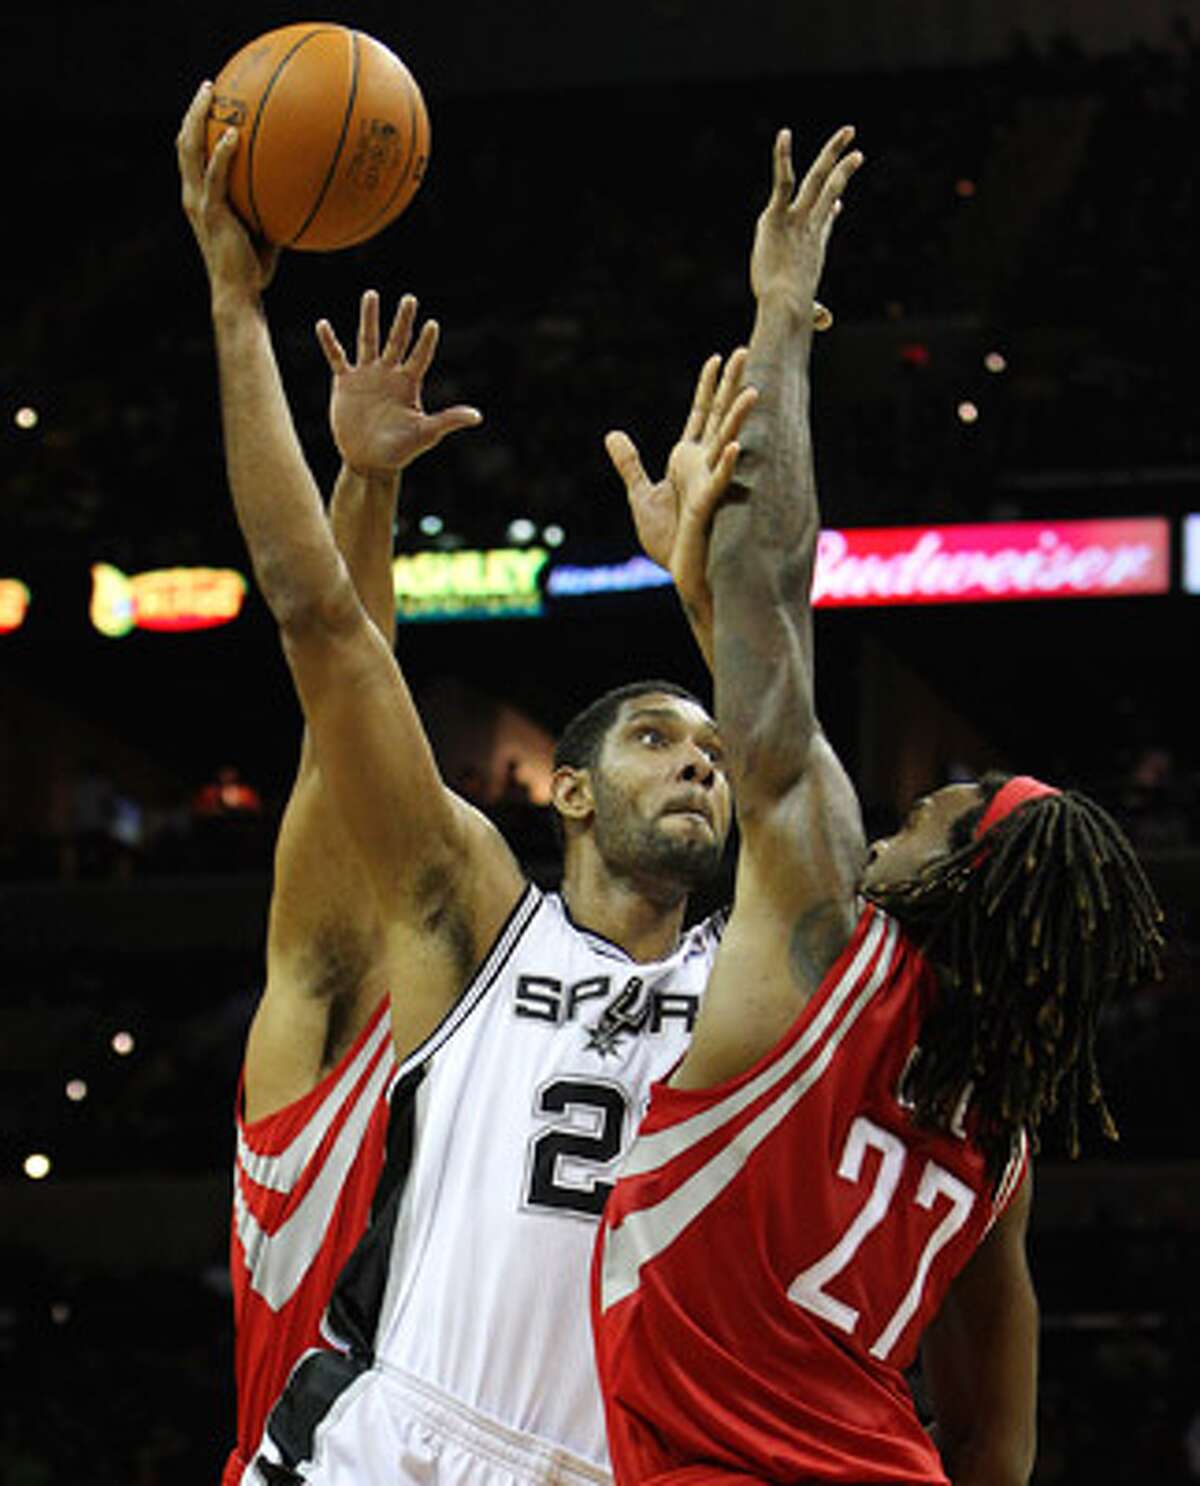 The Spurs’ Tim Duncan (center) puts up a shot over the Rockets’ Jordan Hill (27) in Thursday’s preseason game.